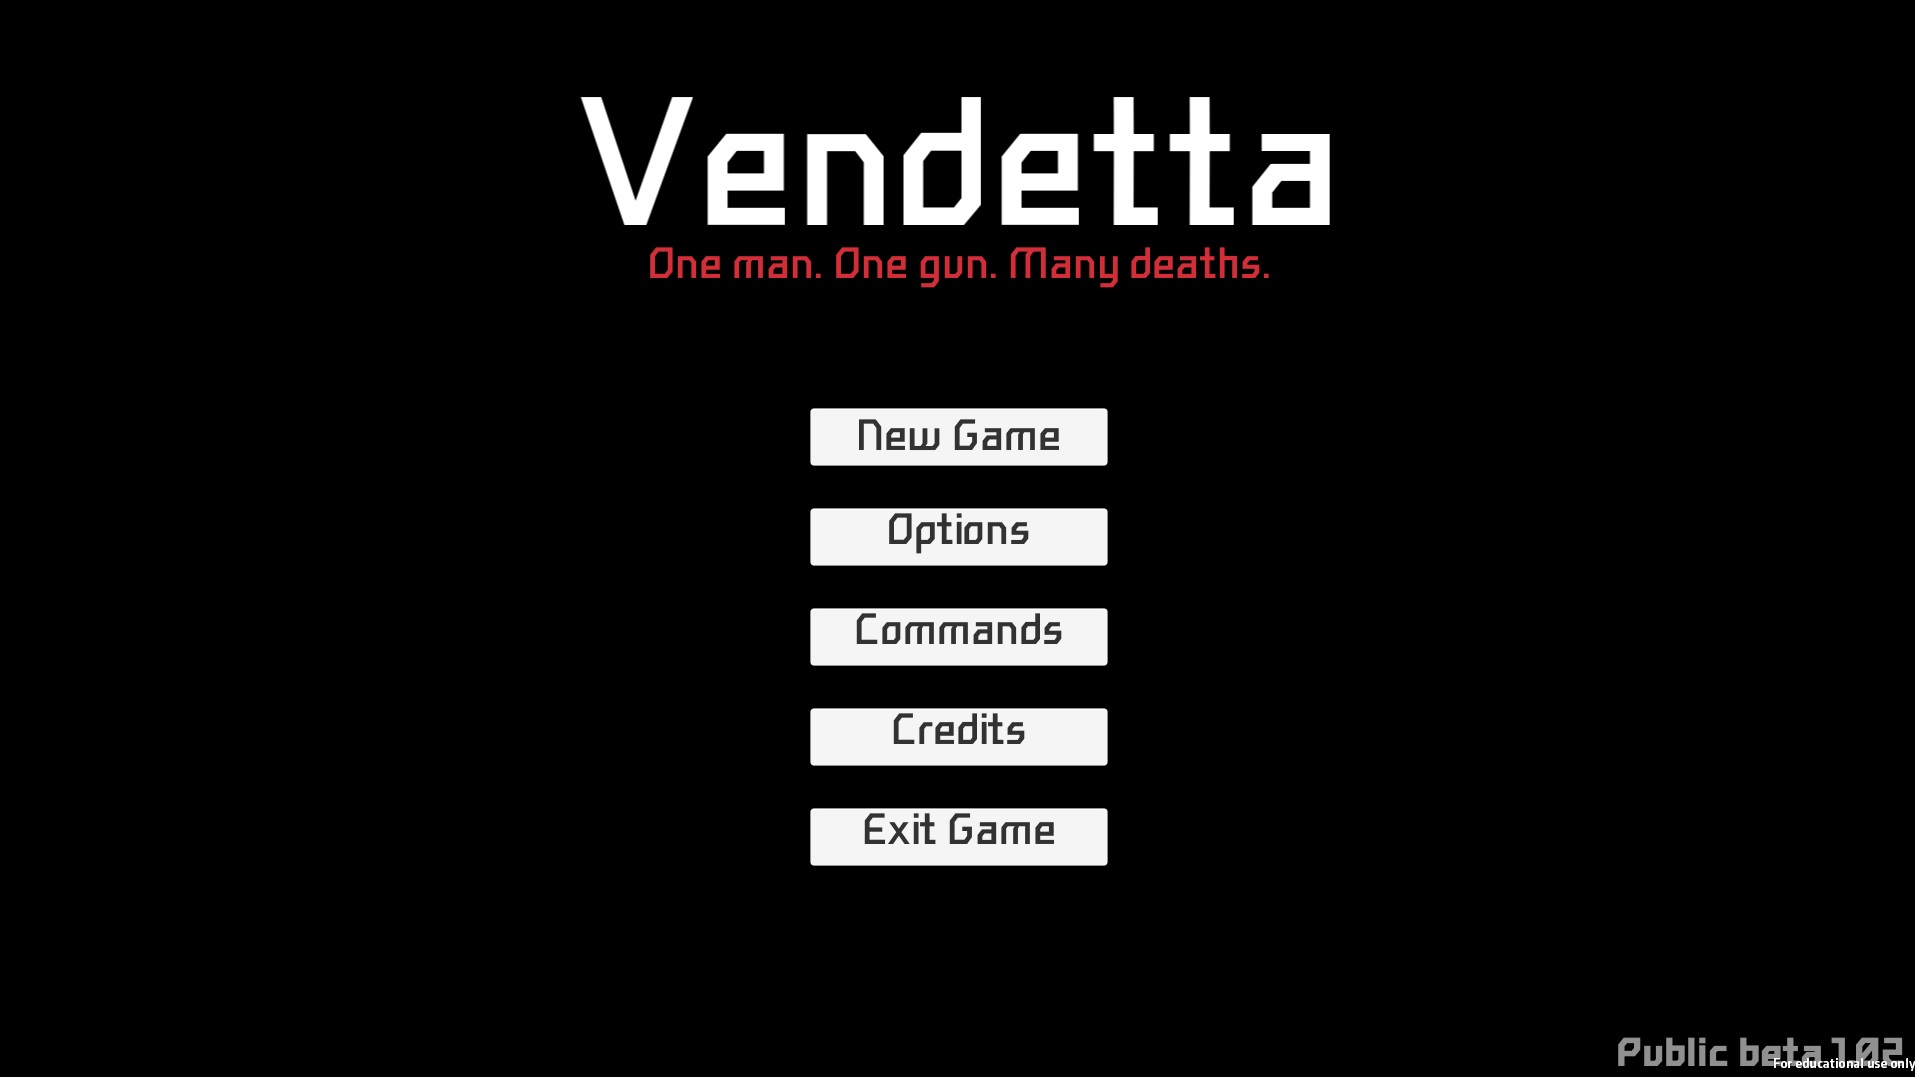 The main menu of the game.